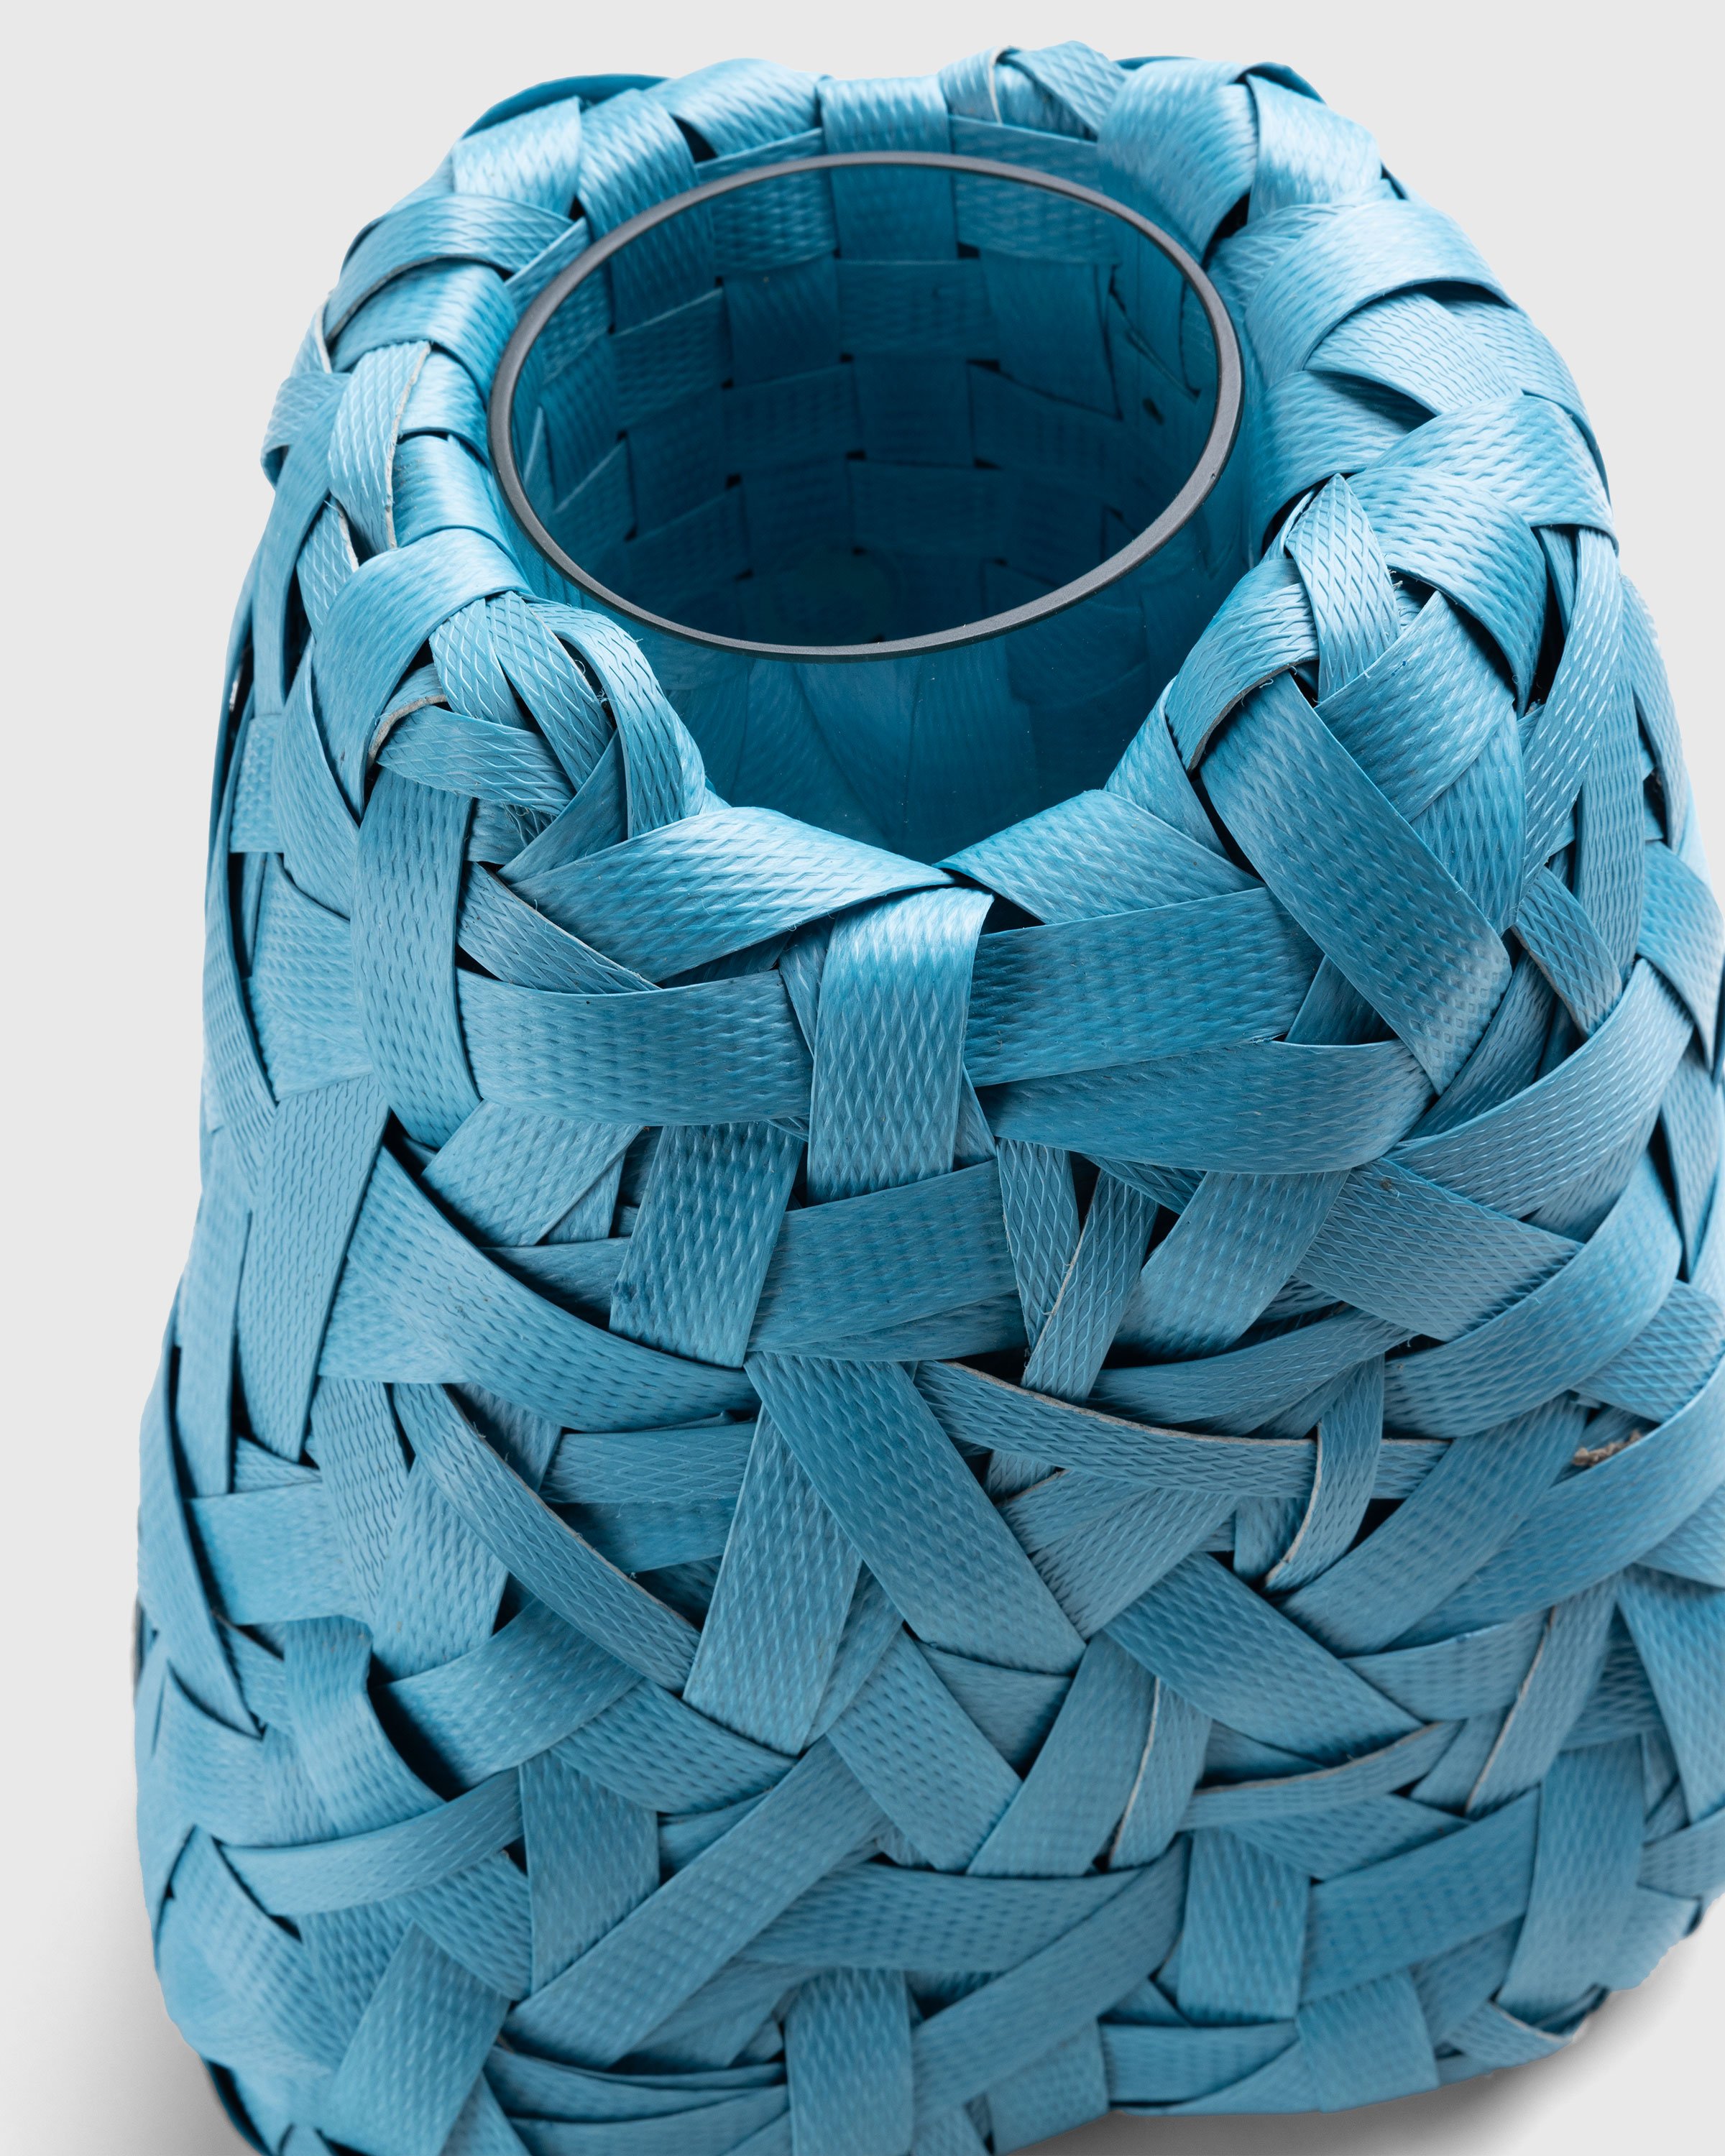 Space Available Studio - Woven Ecology Vase Blue - Lifestyle - Blue - Image 3